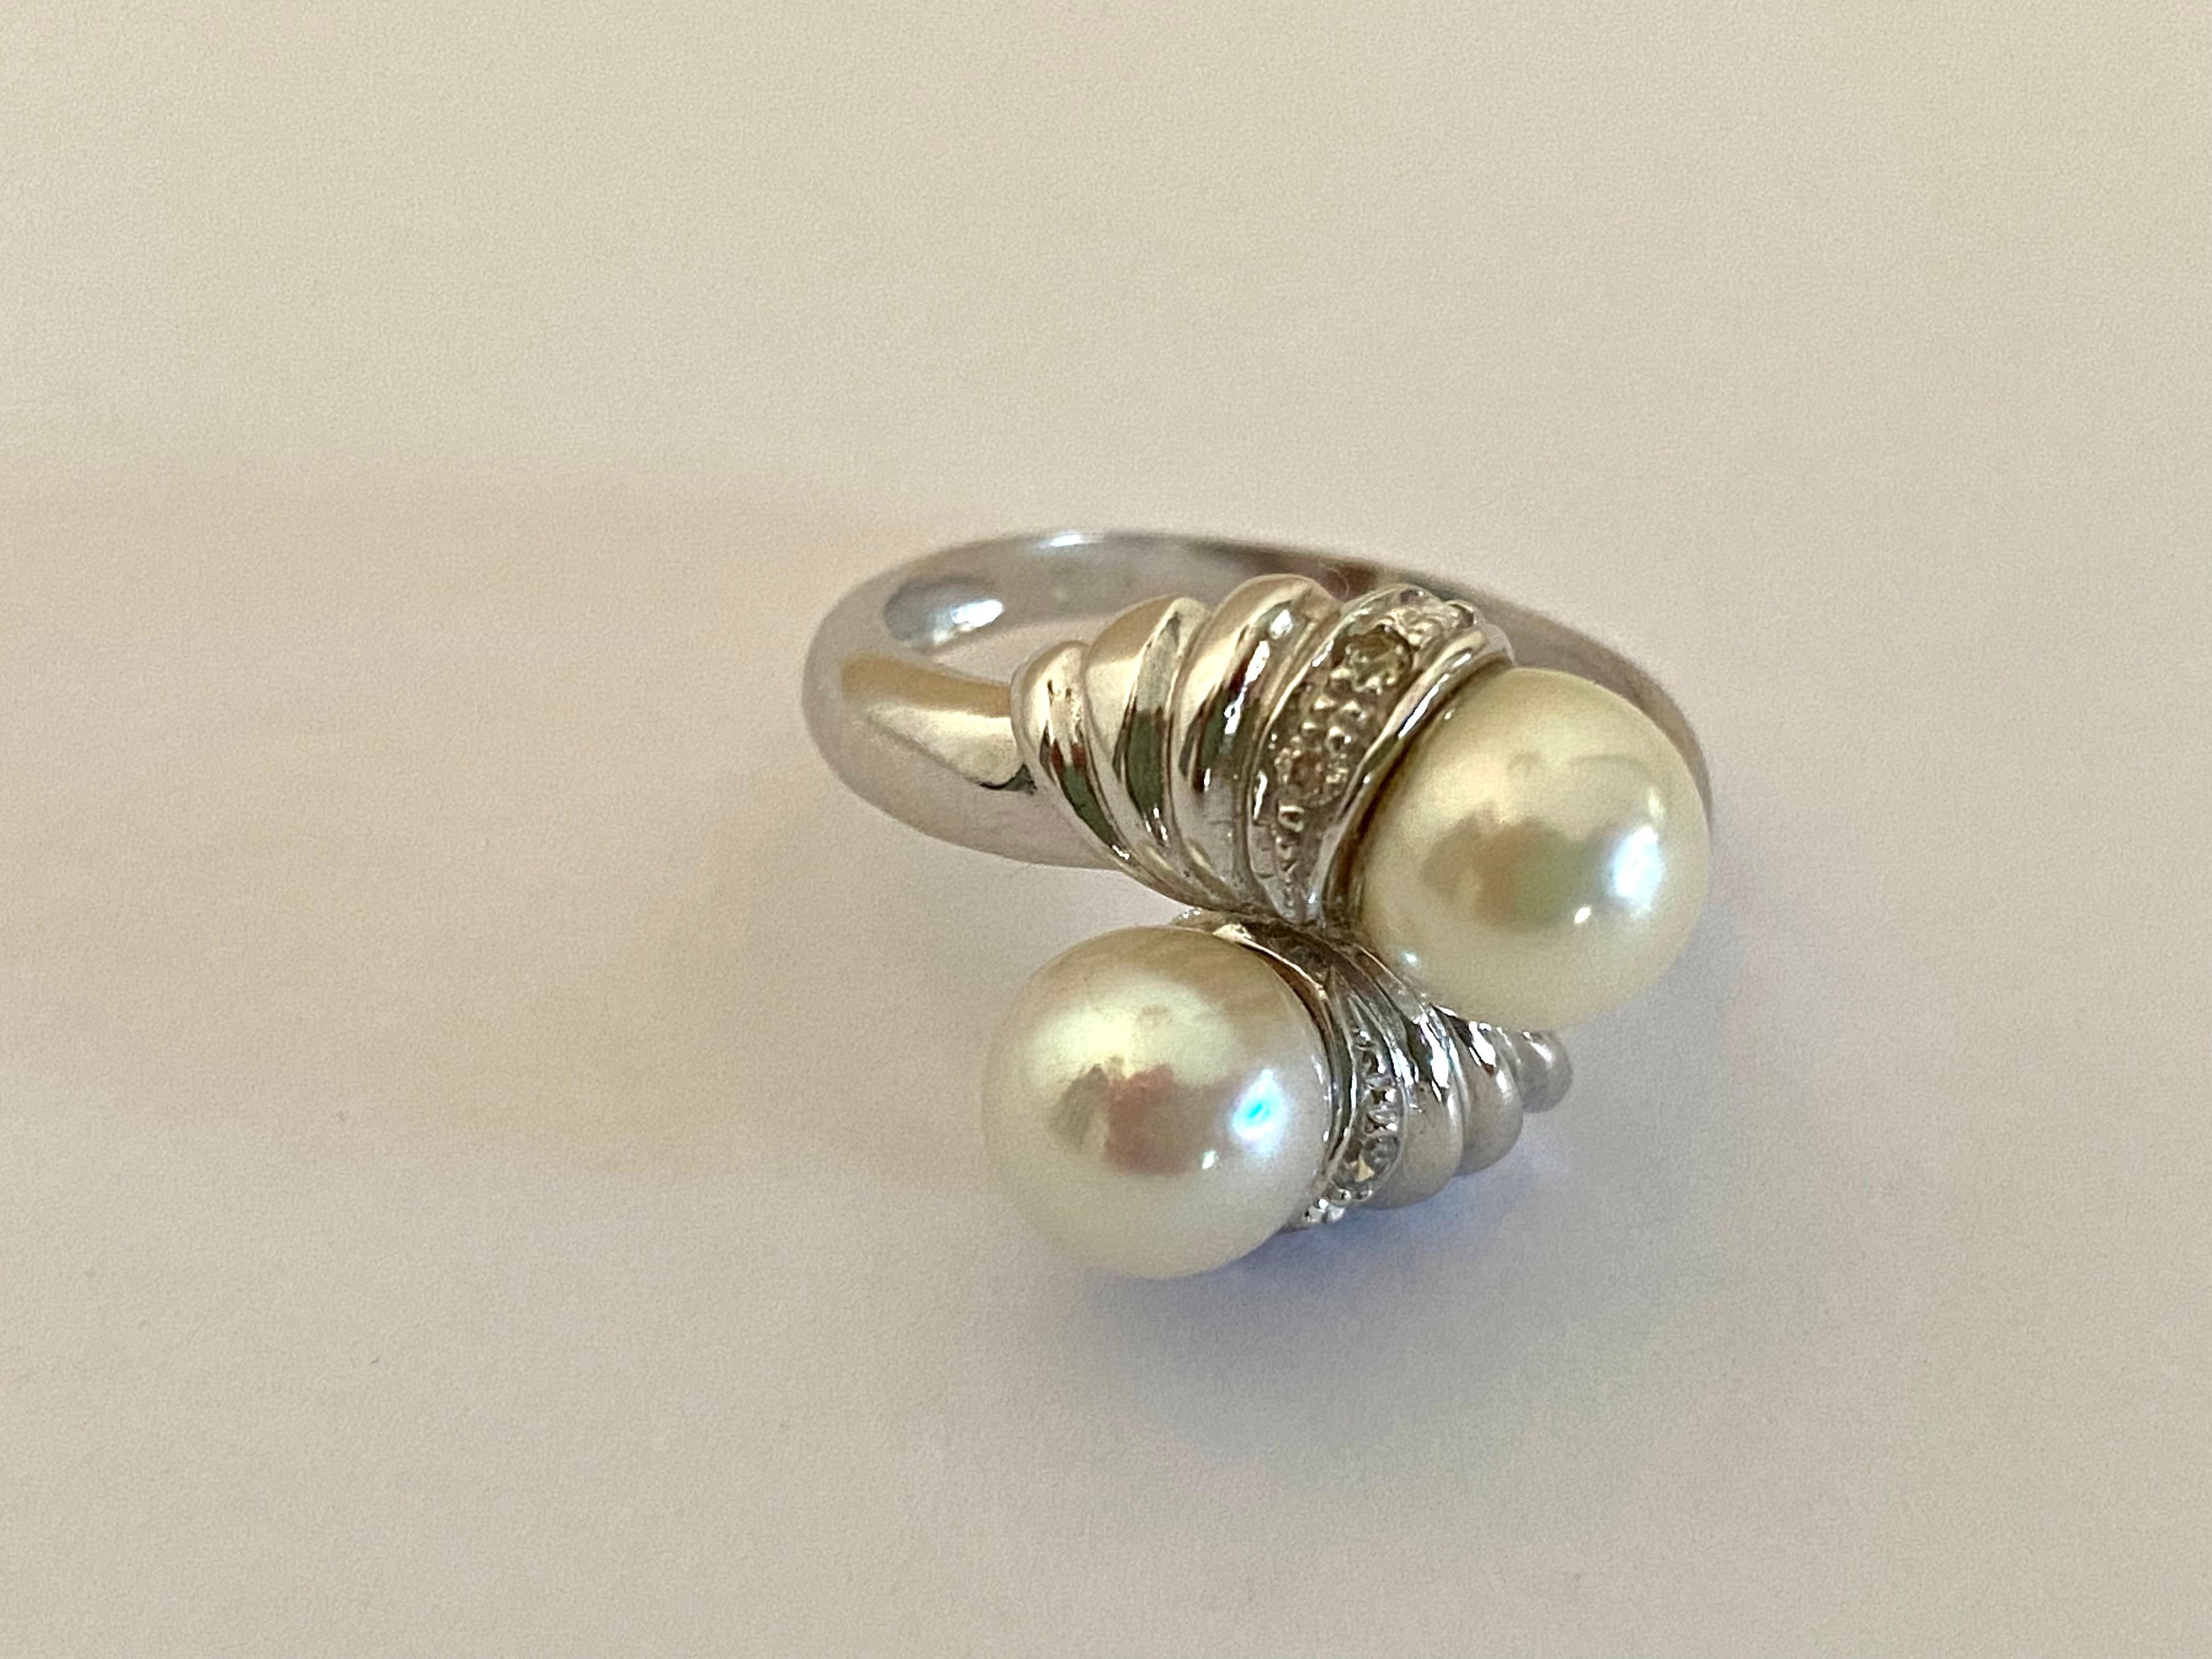 Brilliant Cut 18 kt White Gold Ring, Sea Cultured Pearls and Brilliant cut Diamonds For Sale